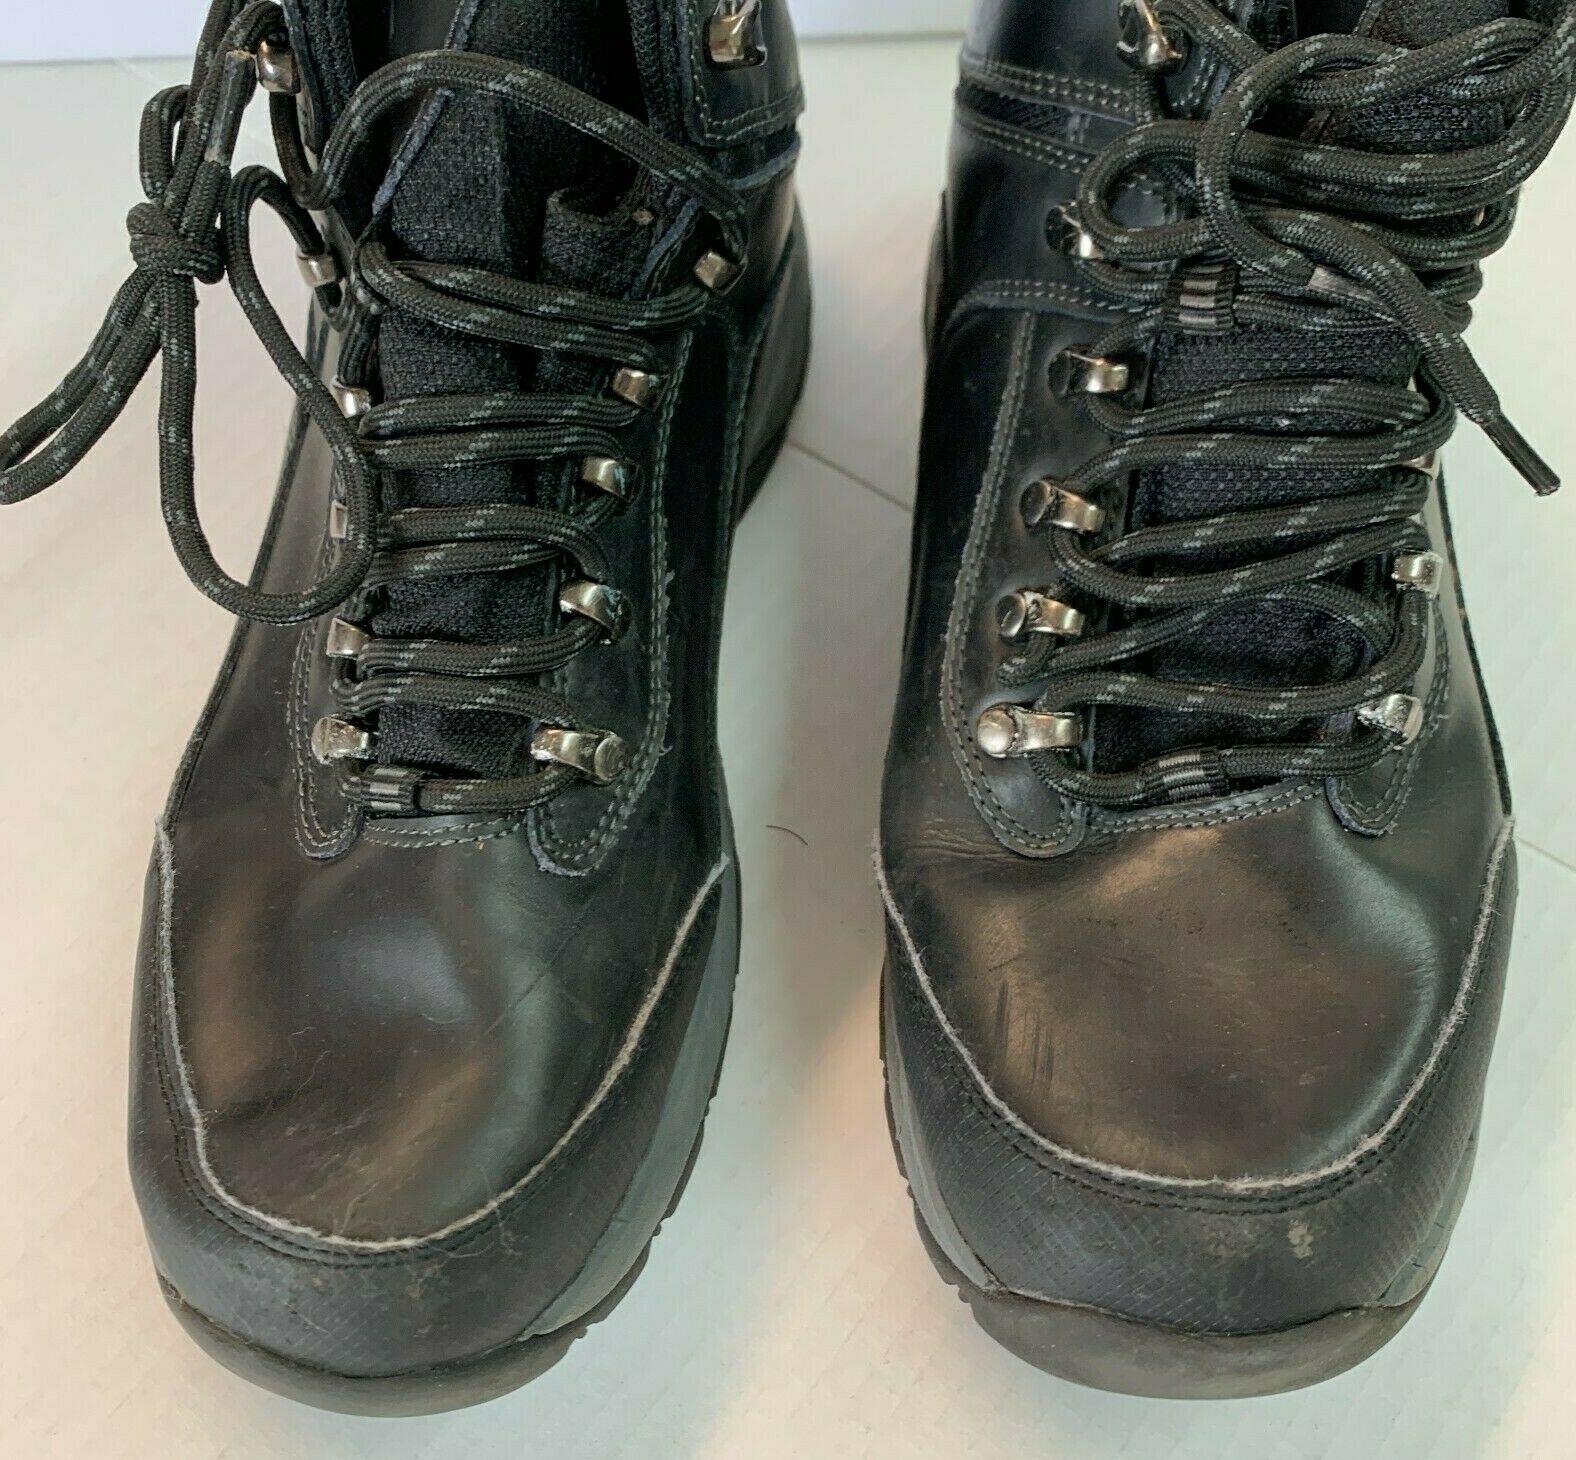 Khombu Men's Hiking Boots Summit Black Leather Outdoor Waterproof 8M GUC